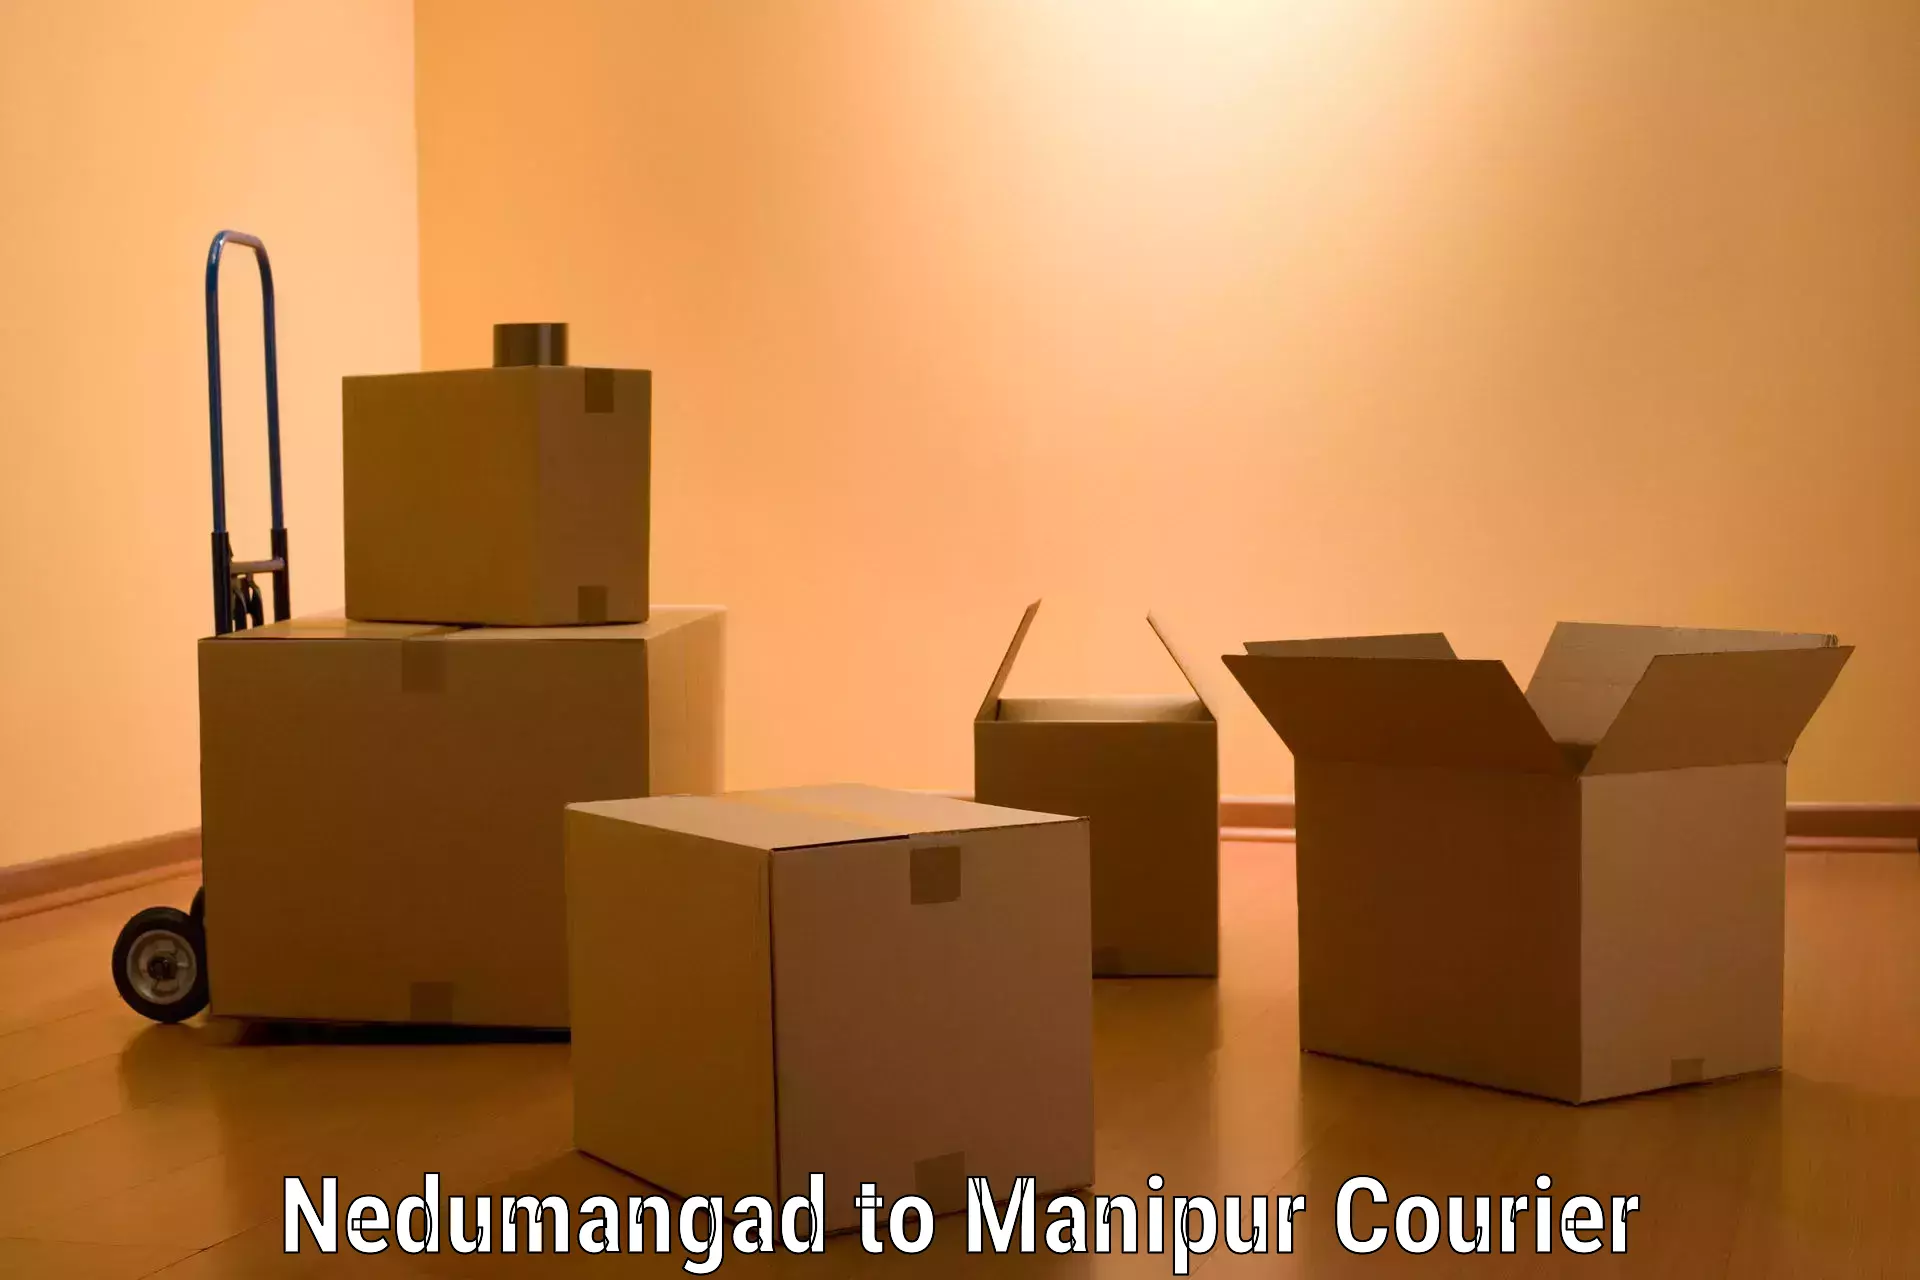 Professional moving company Nedumangad to Manipur